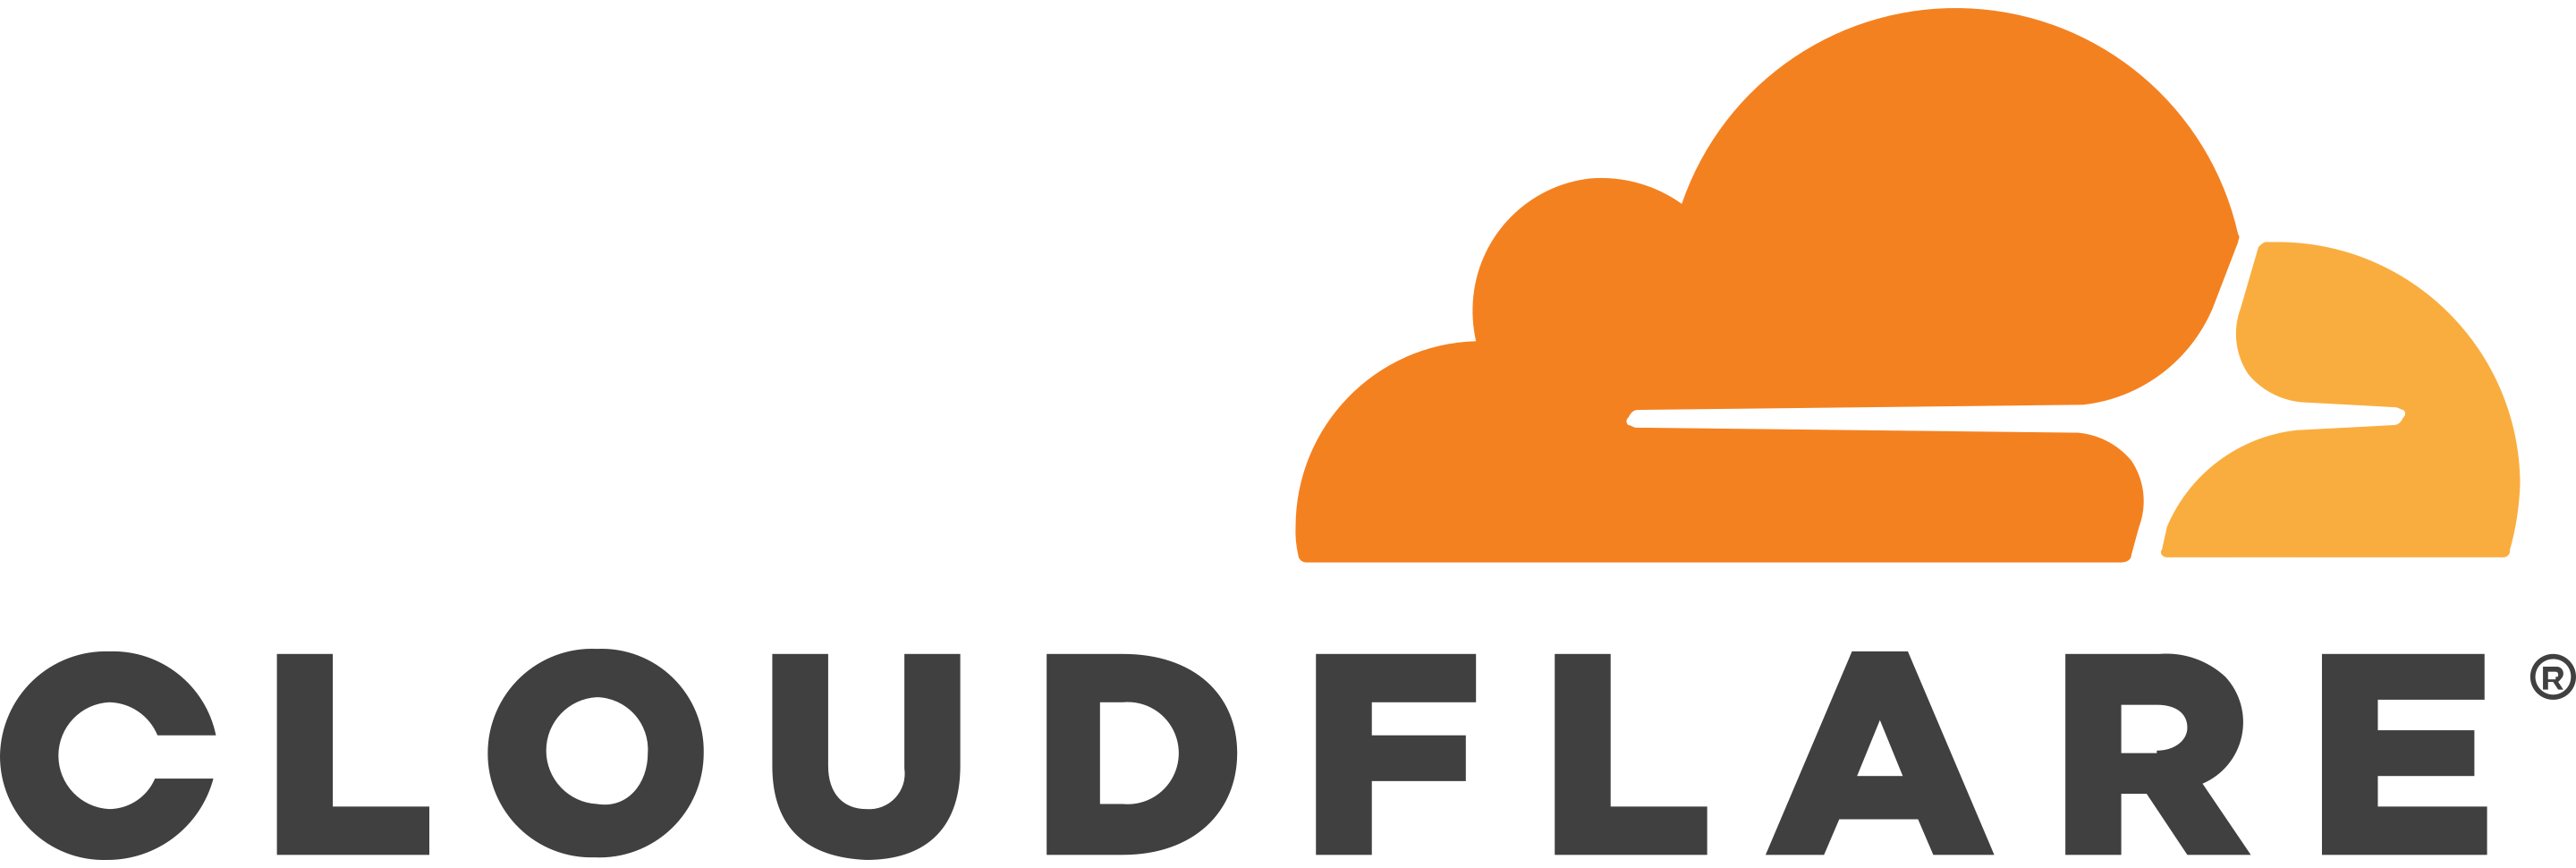 Cloudflare wordmark with orange cloud logo